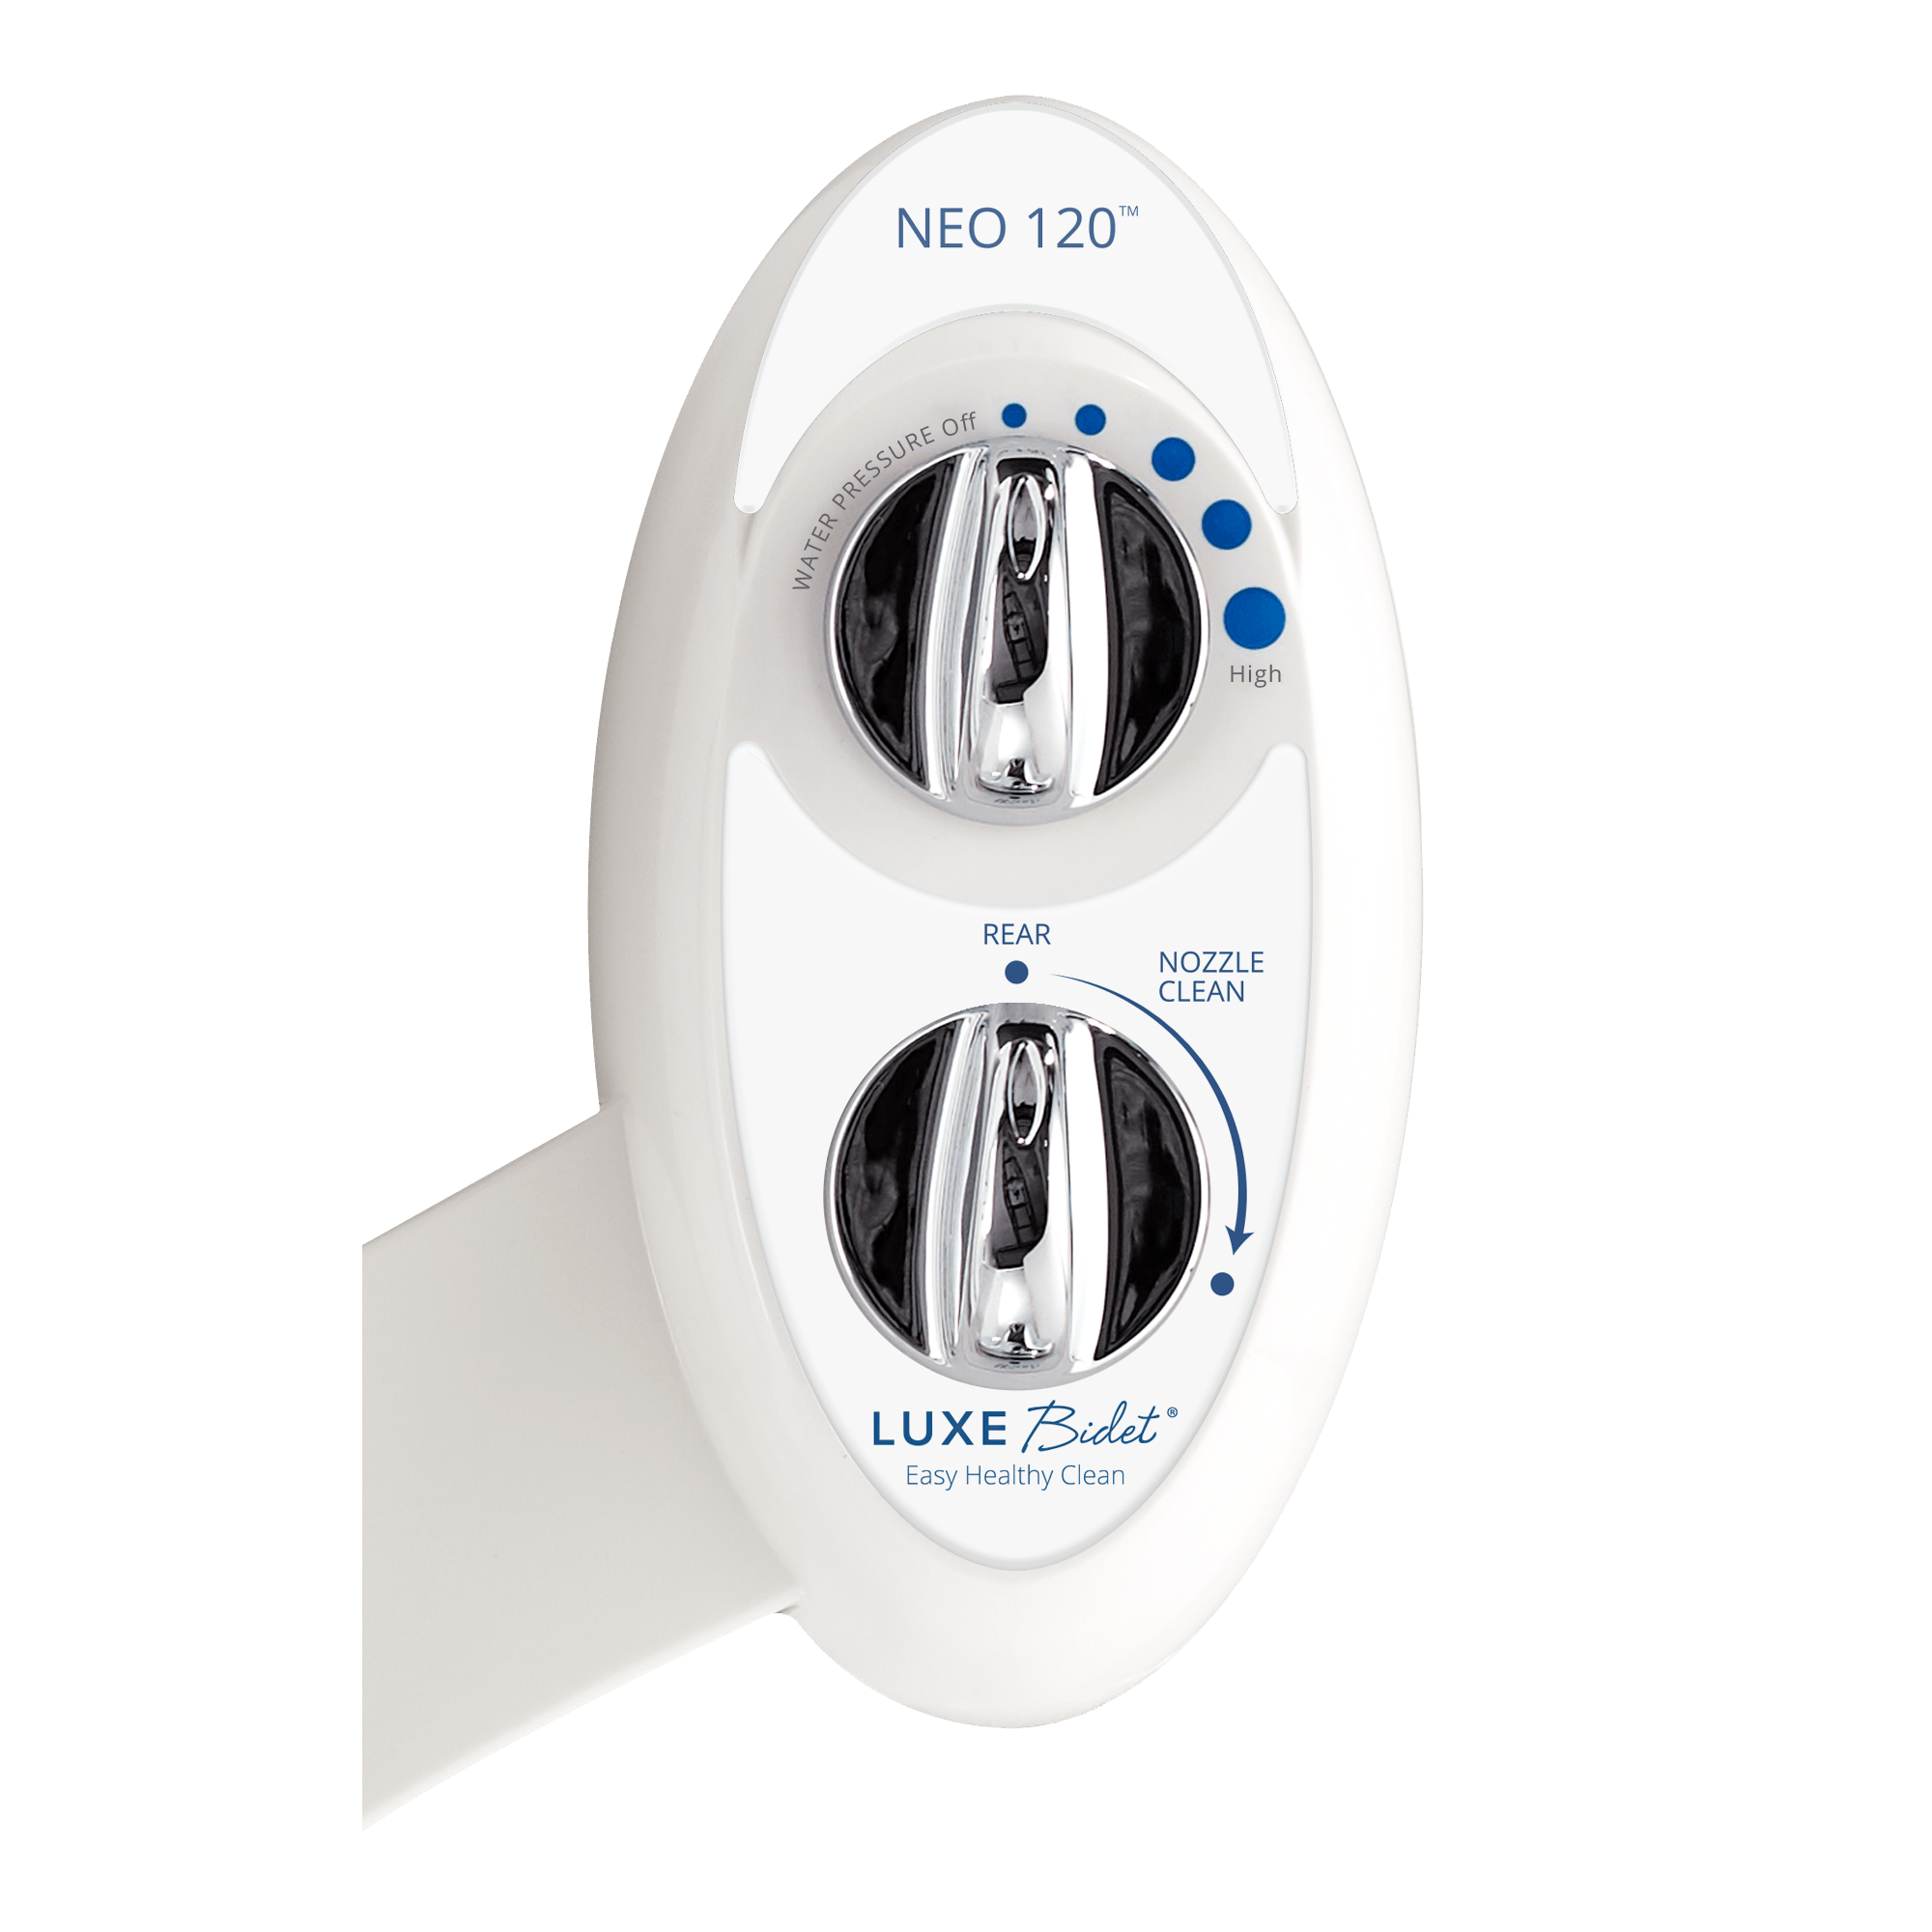 NEO 120 White control panel with a white sticker label